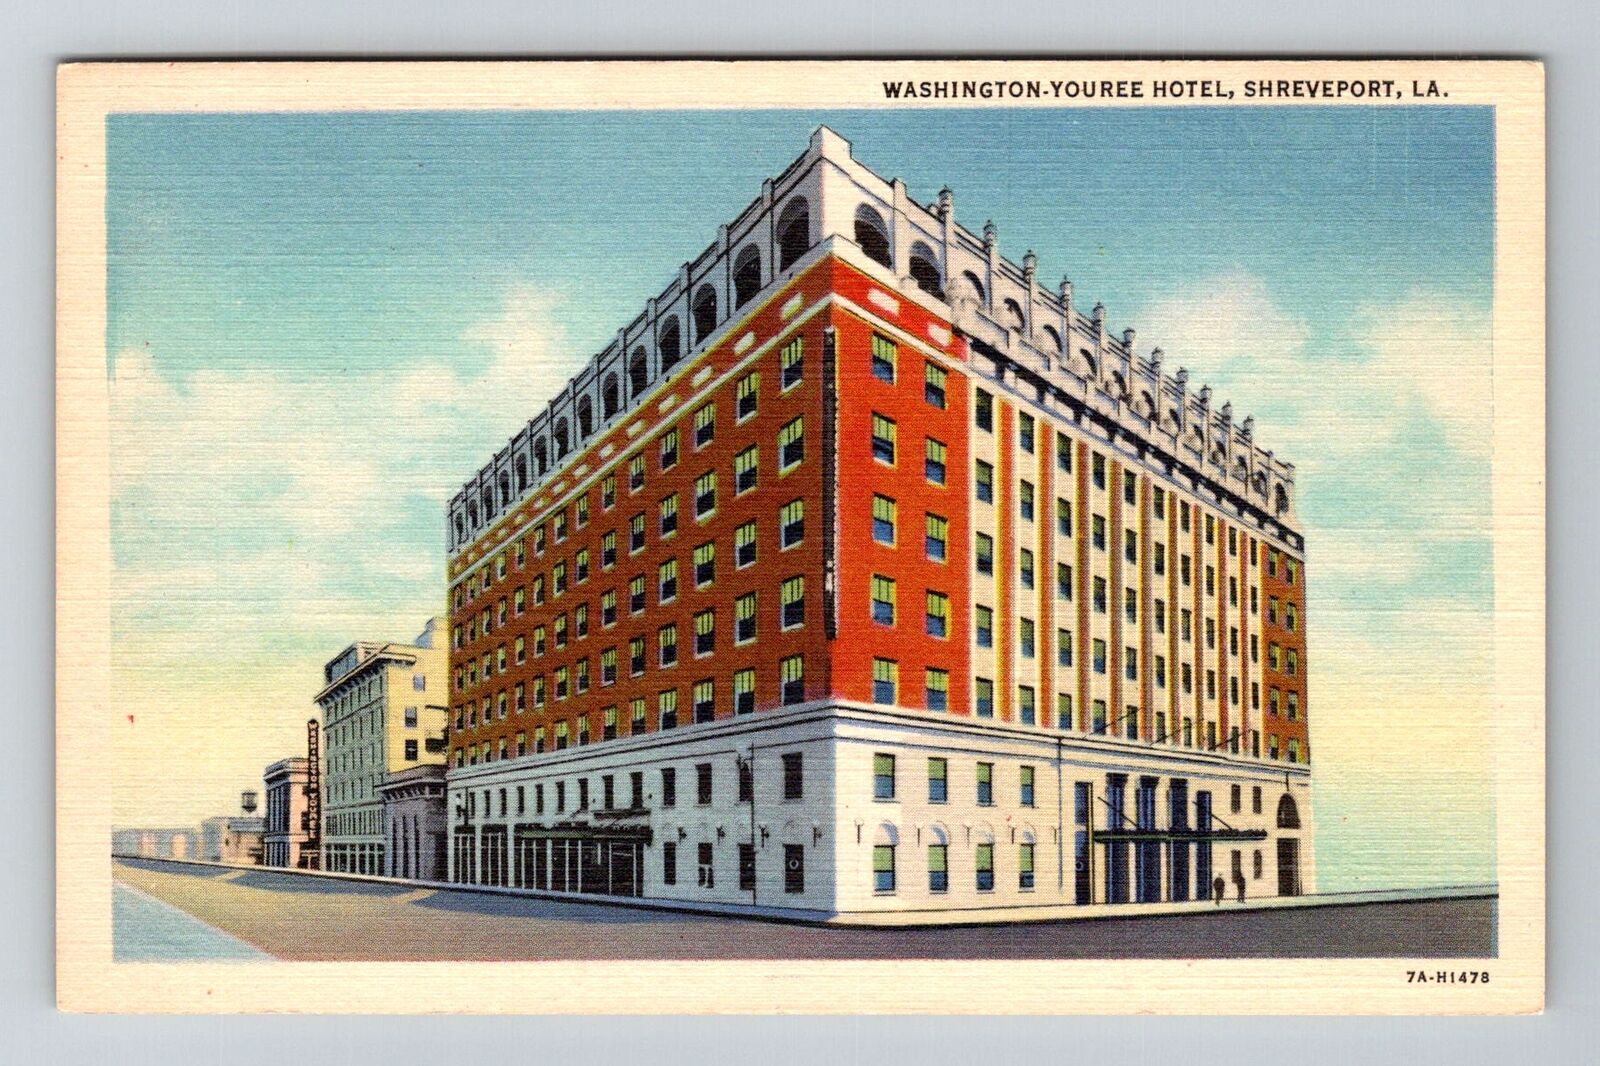 Shreveport LA-Louisiana, Washington Youree Hotel Antique Vintage Postcard